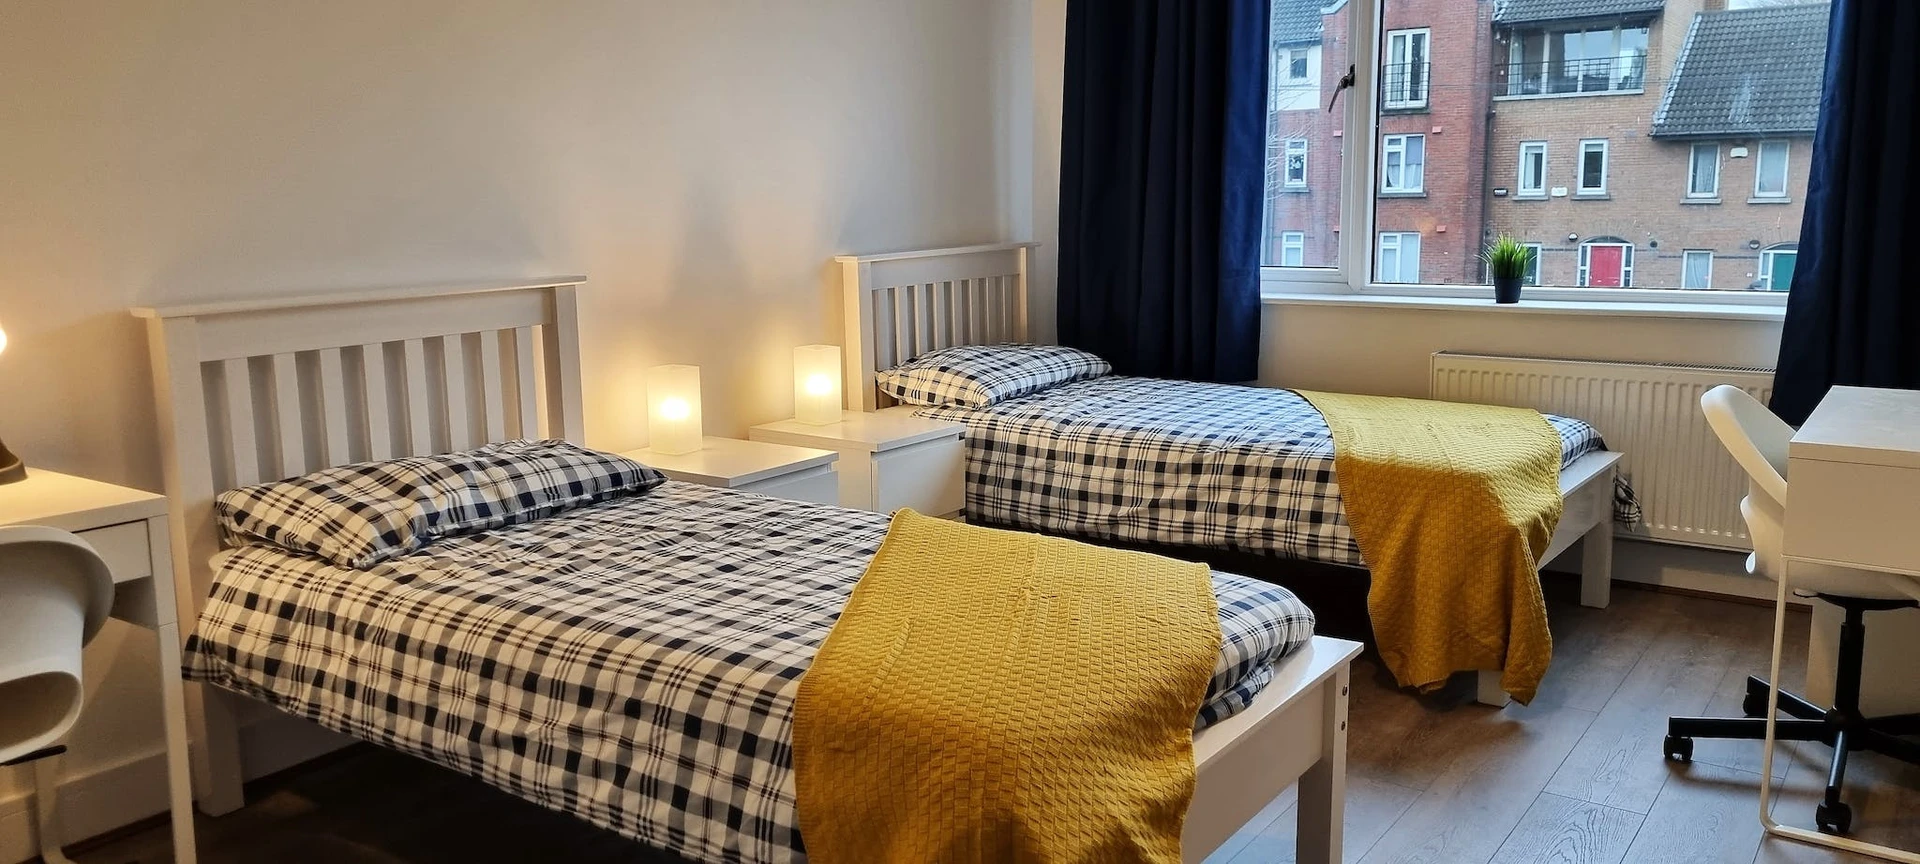 Cheap shared room in Dublin